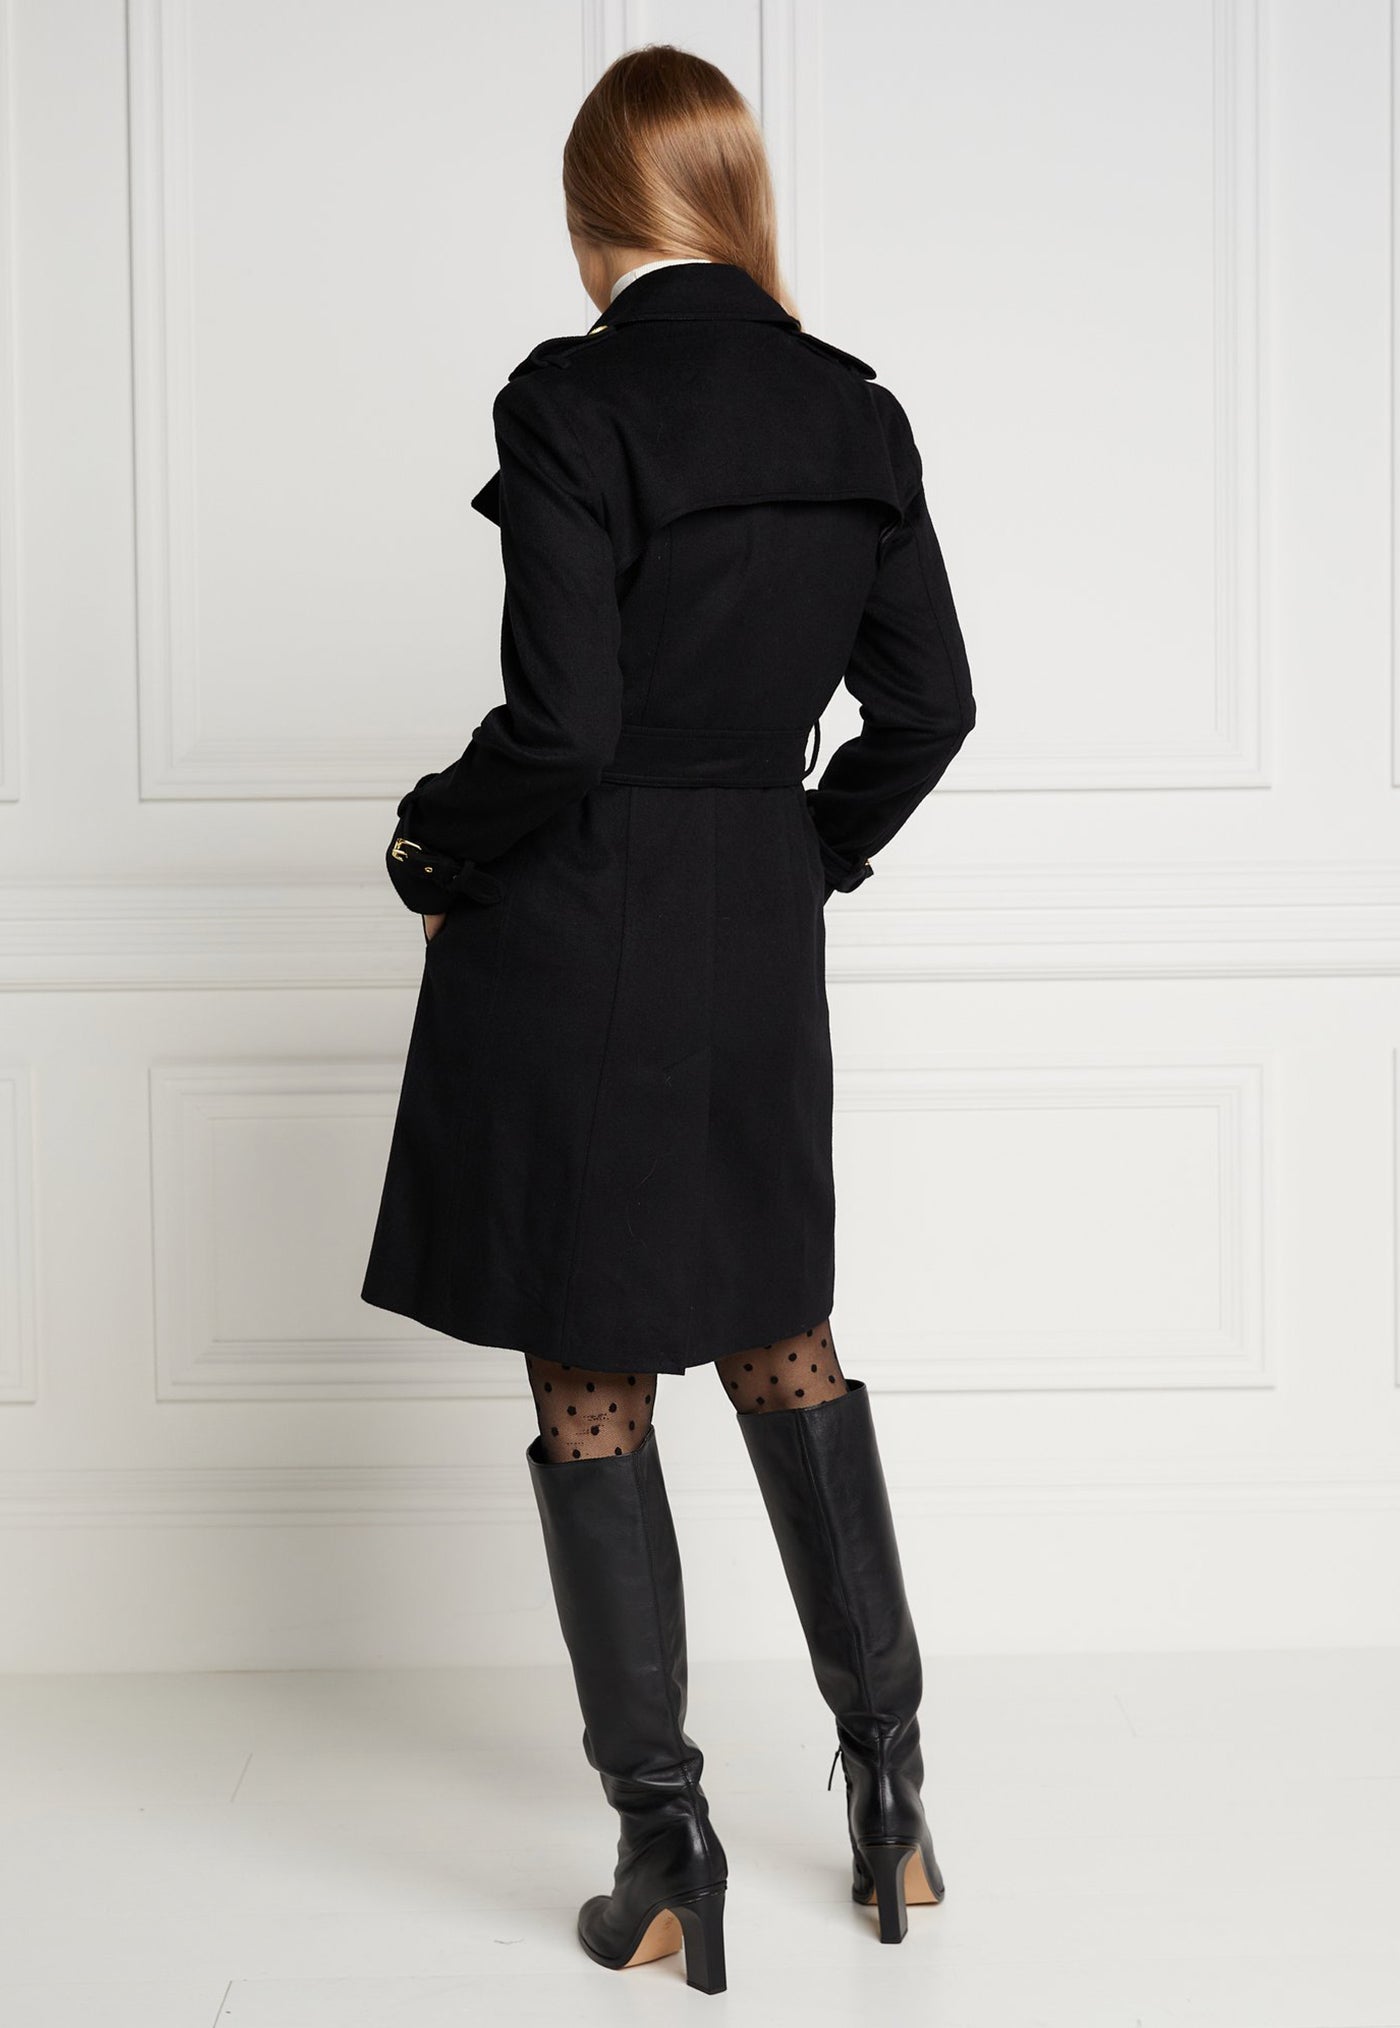 Marlborough Trench Coat - Soft Black sold by Angel Divine